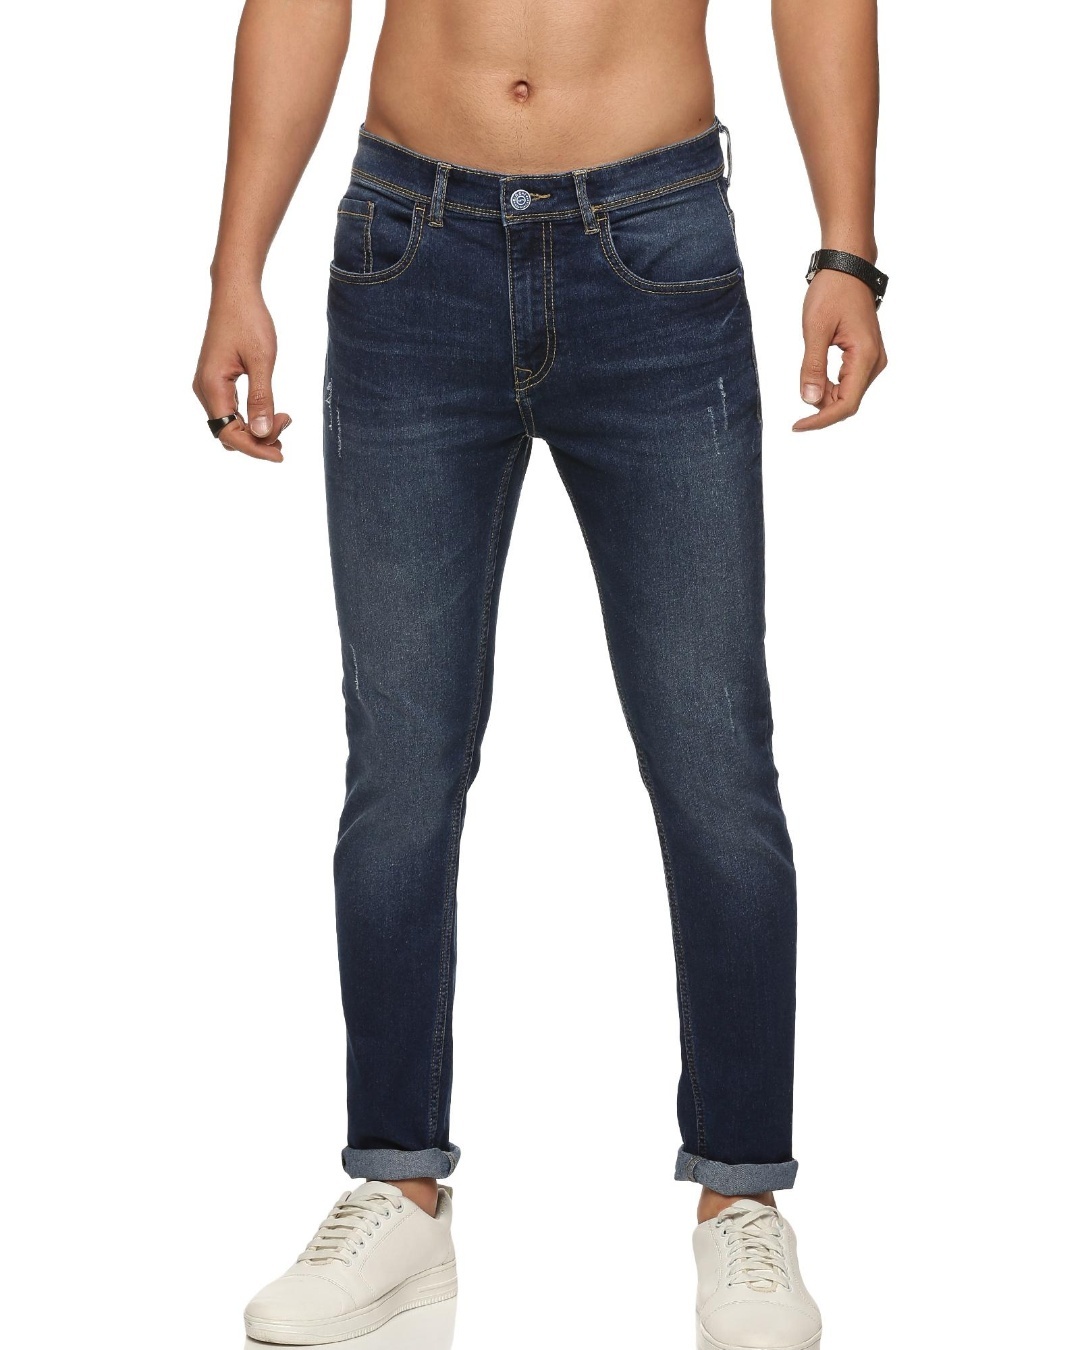 Buy Men's Blue Washed Slim Fit Jeans Online at Bewakoof